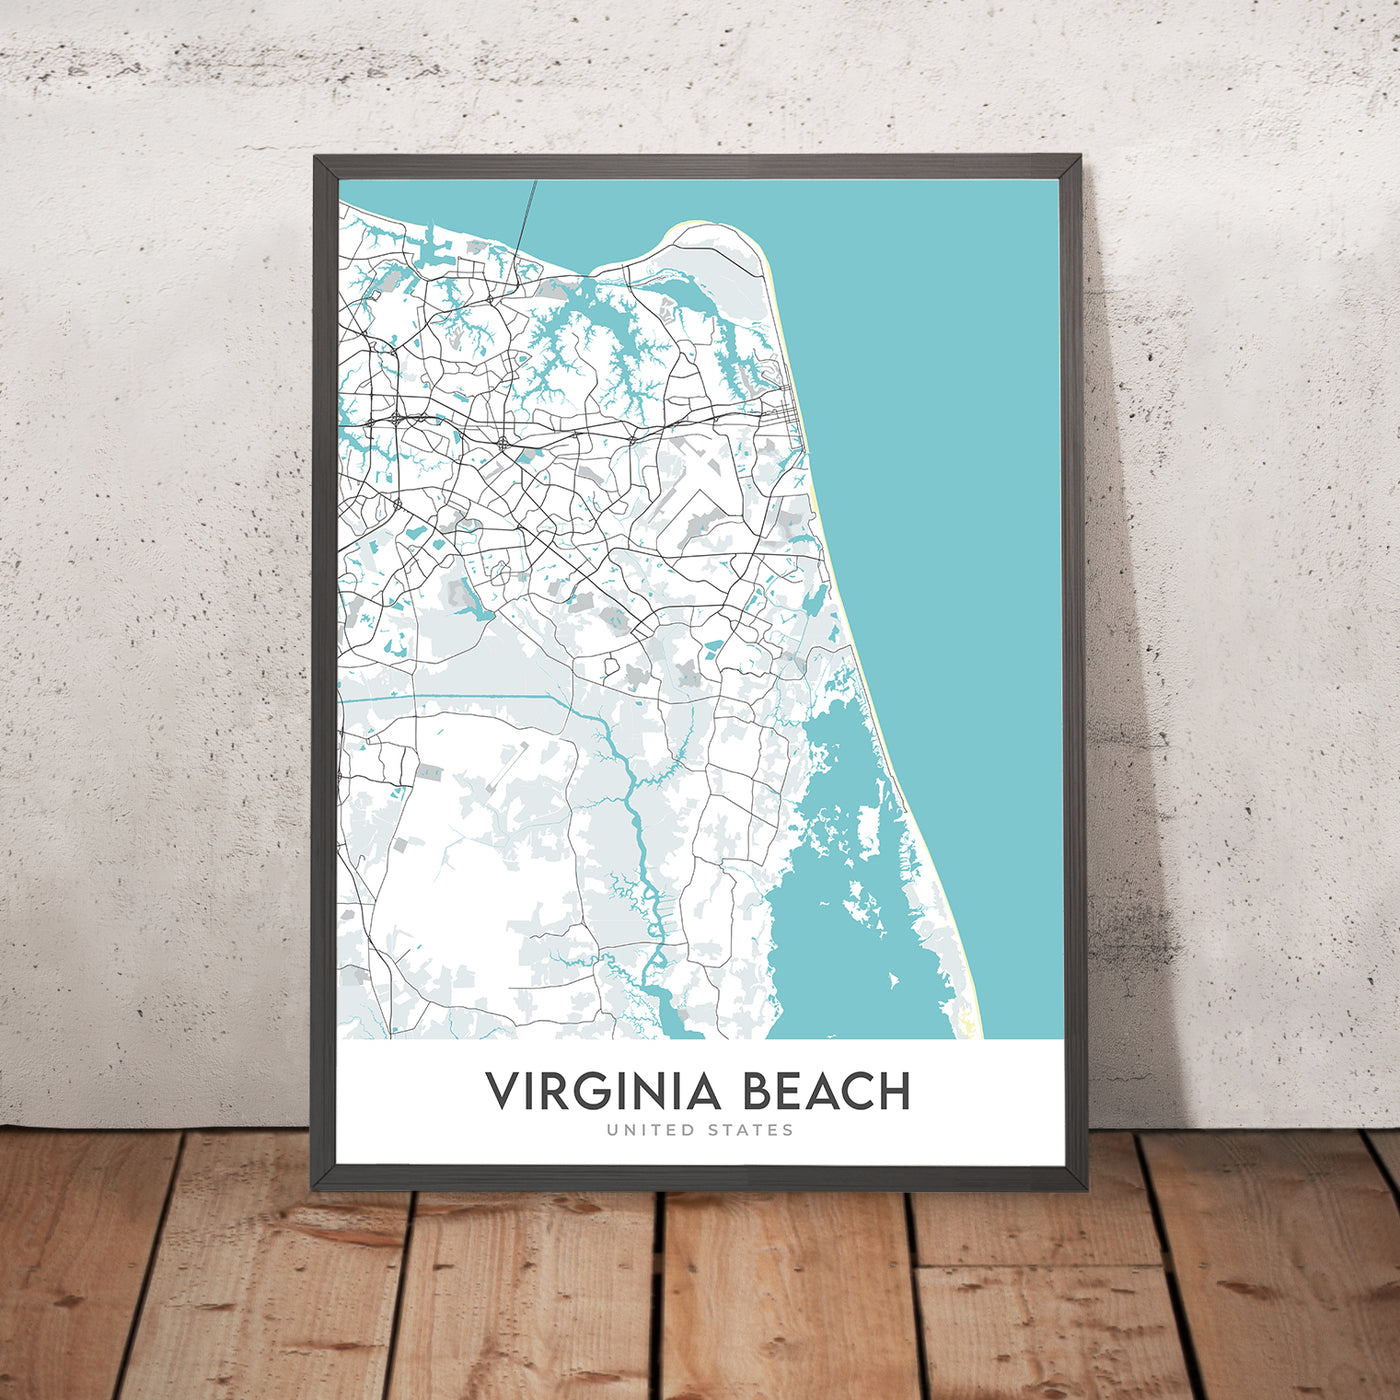 Modern City Map of Virginia Beach, VA: Aquarium, Cape Henry Lighthouse, Beach Boardwalk, Pembroke Manor, Chic's Beach